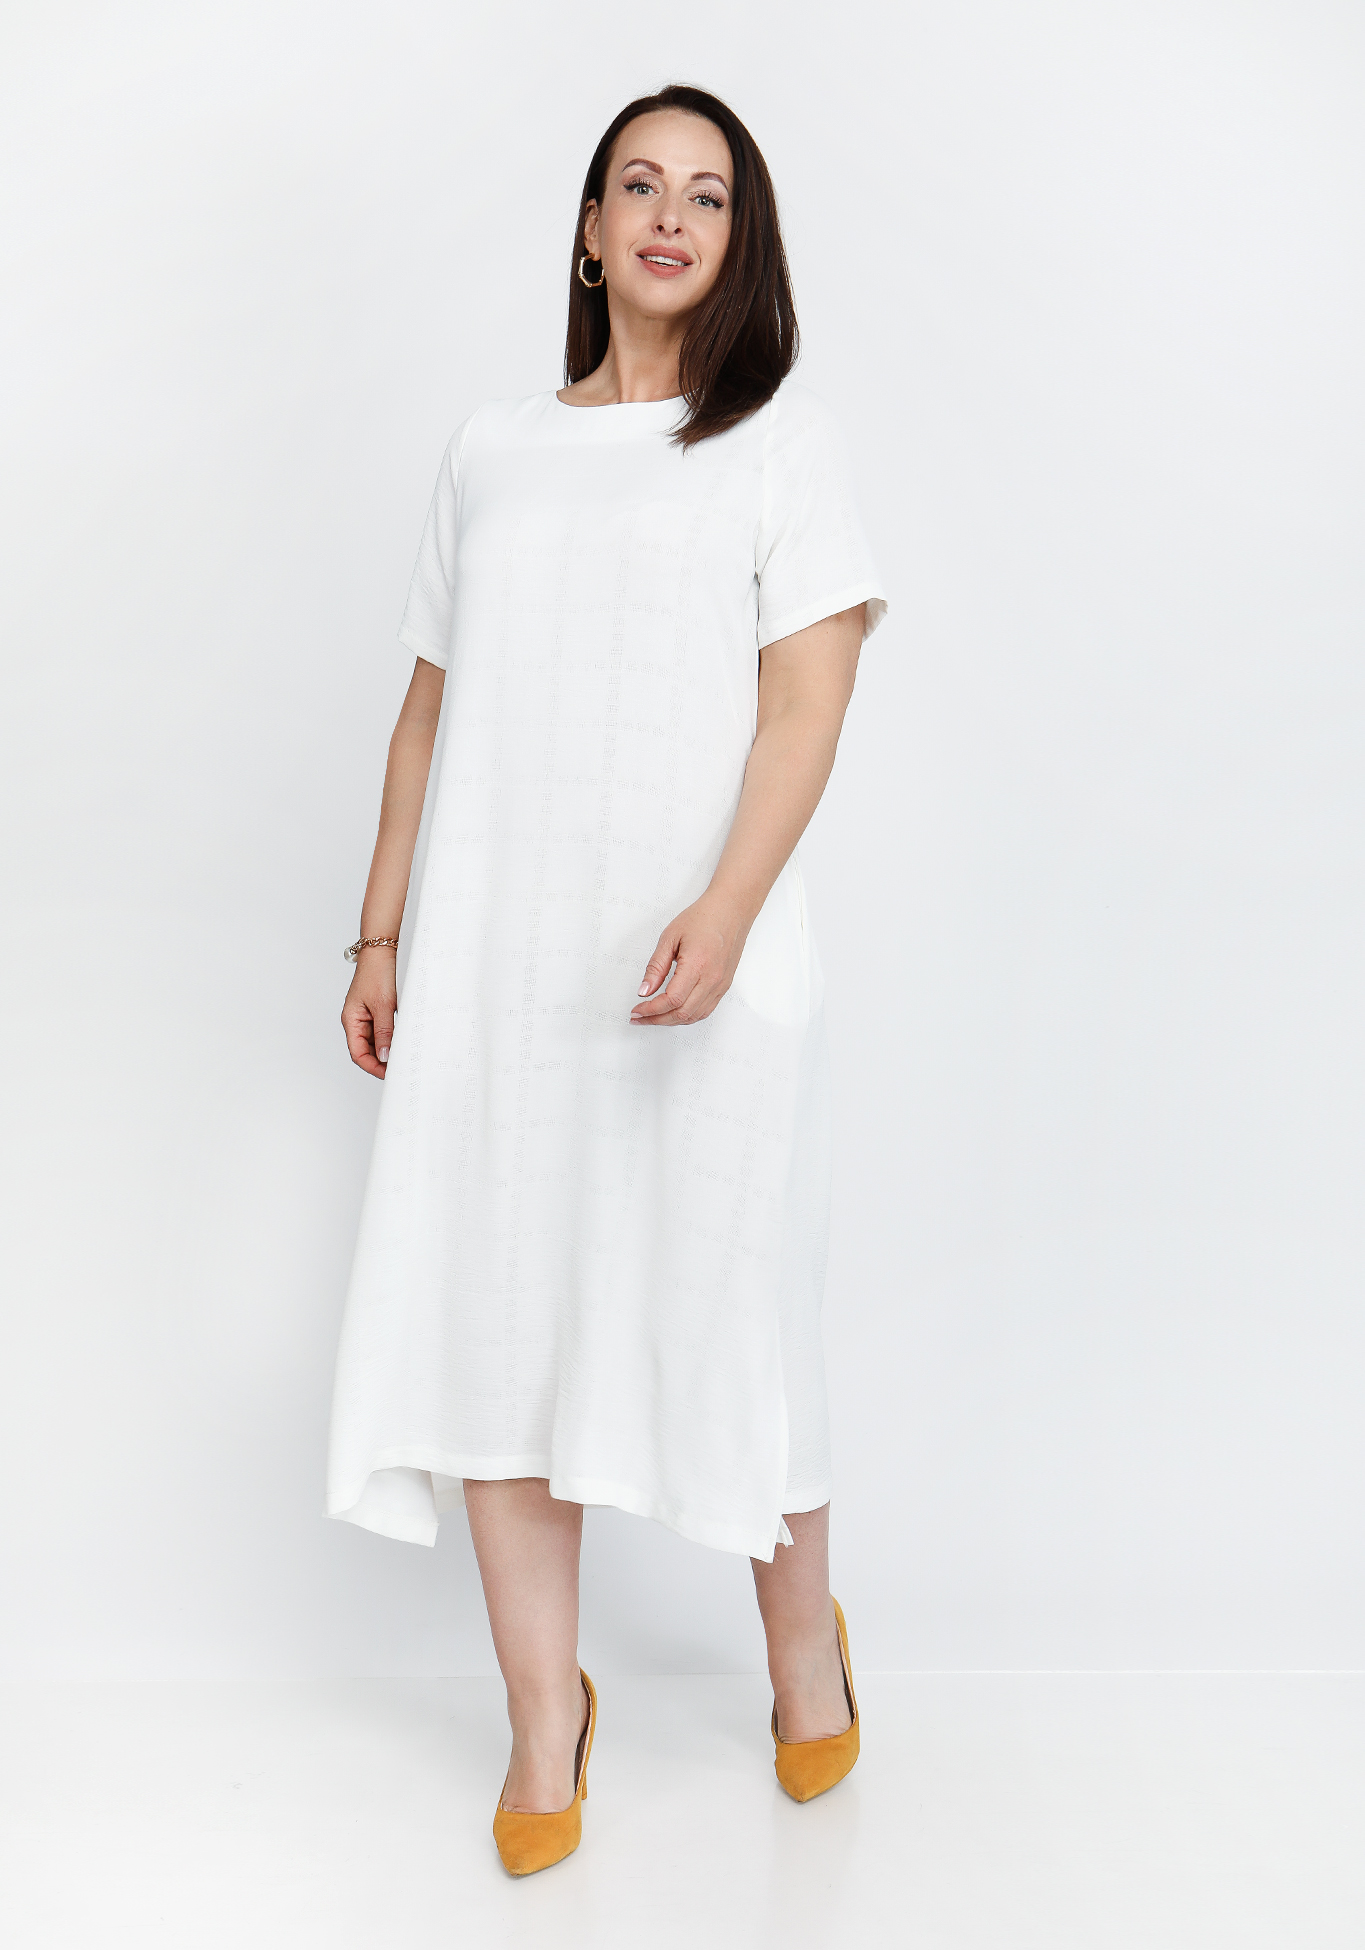 Платье с коротким рукавом миди Alex Voice Collection, размер 50, цвет белый - фото 5